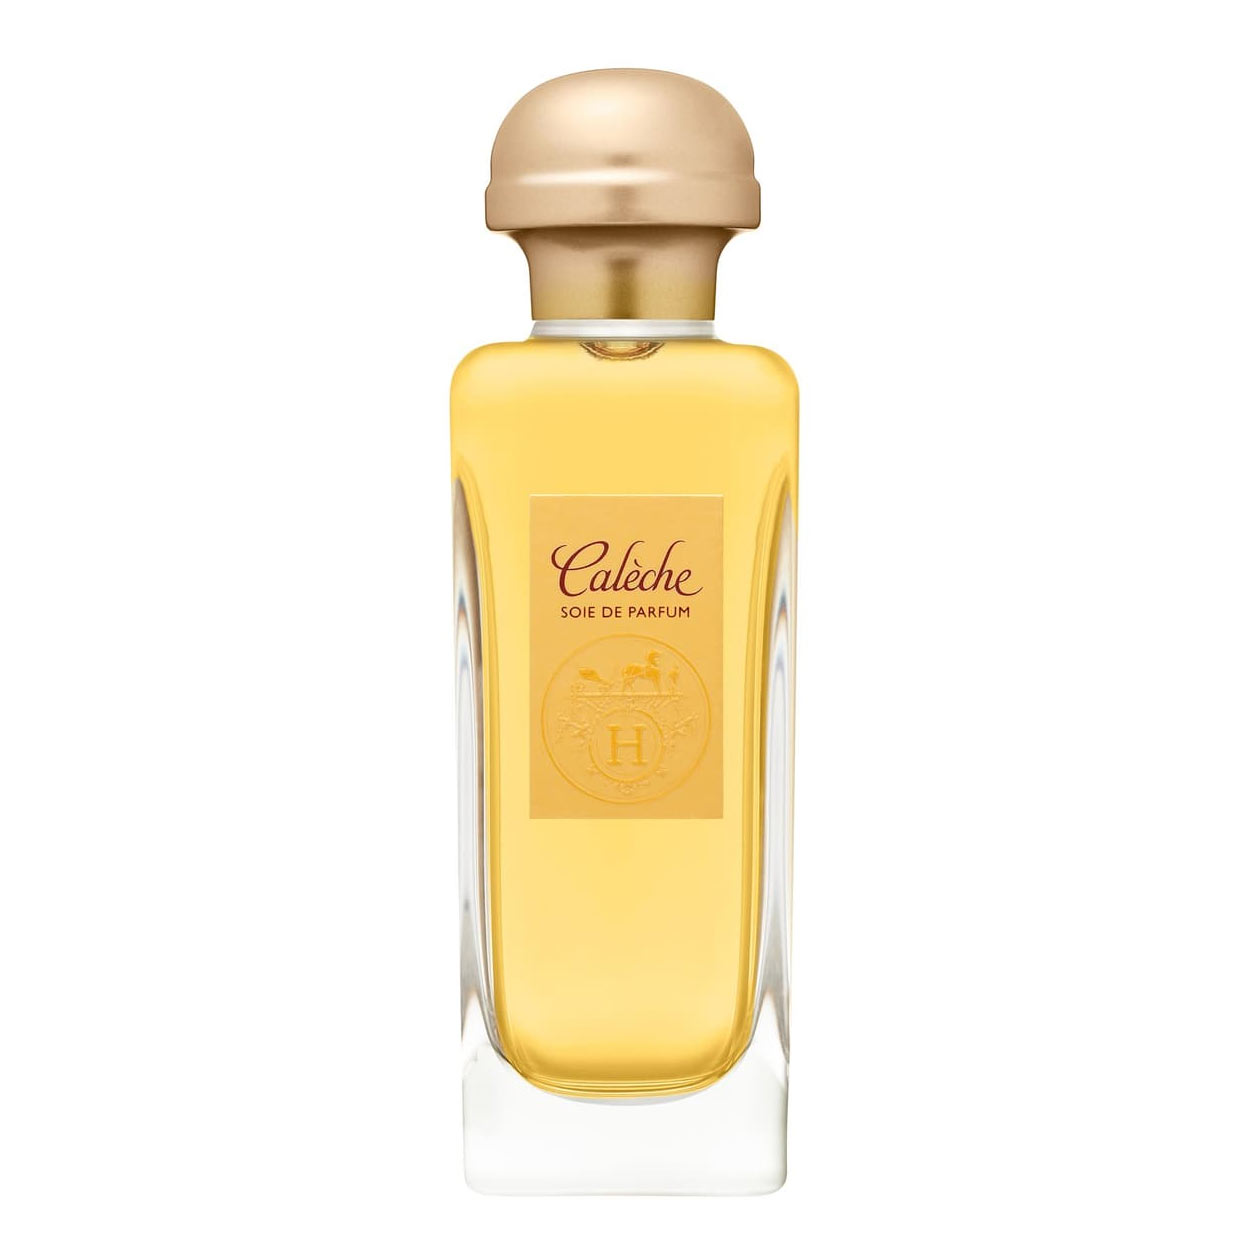 Caleche Soie de Parfum Hermes Image